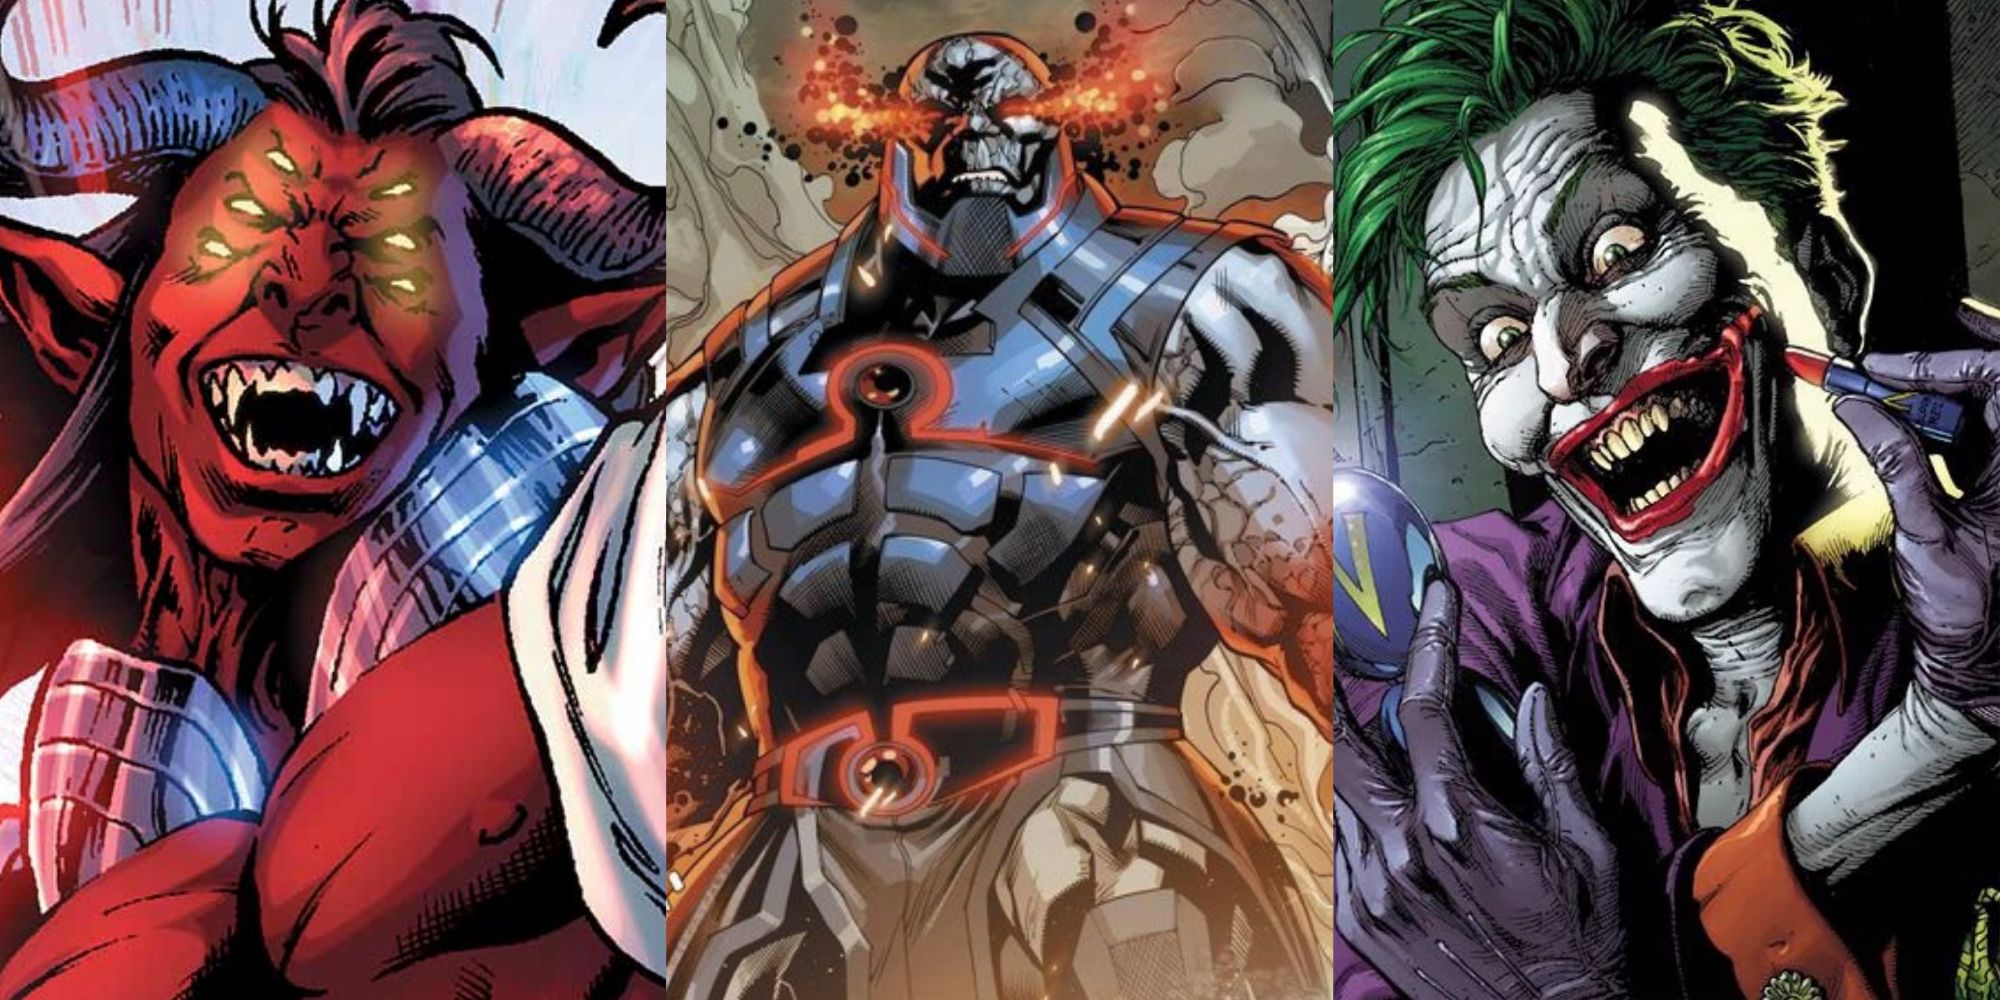 split image of Trigon, Darkseid, and Joker